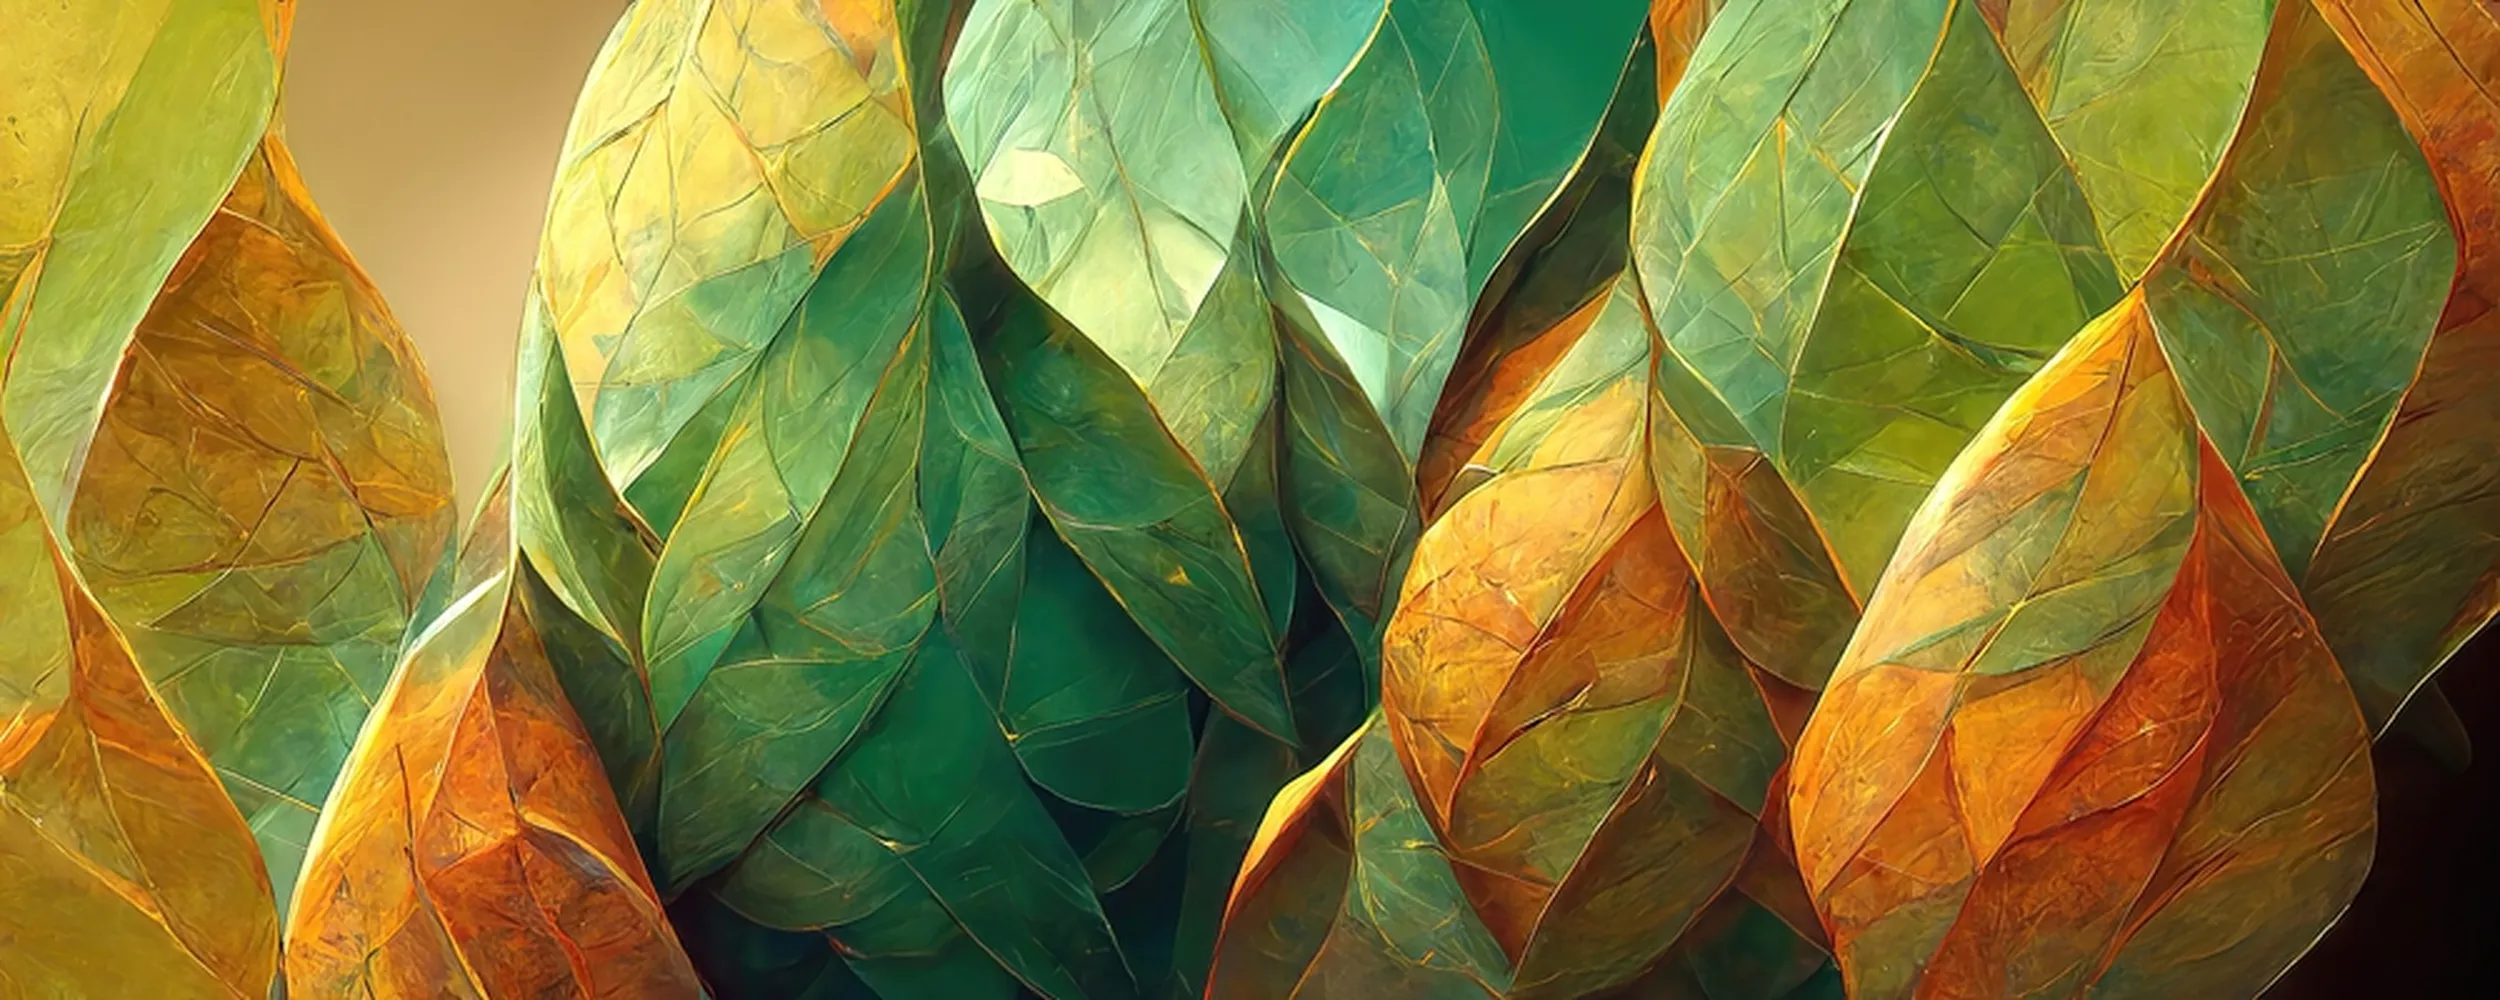 پوستر پاییزی طرح اشکال رنگارنگ